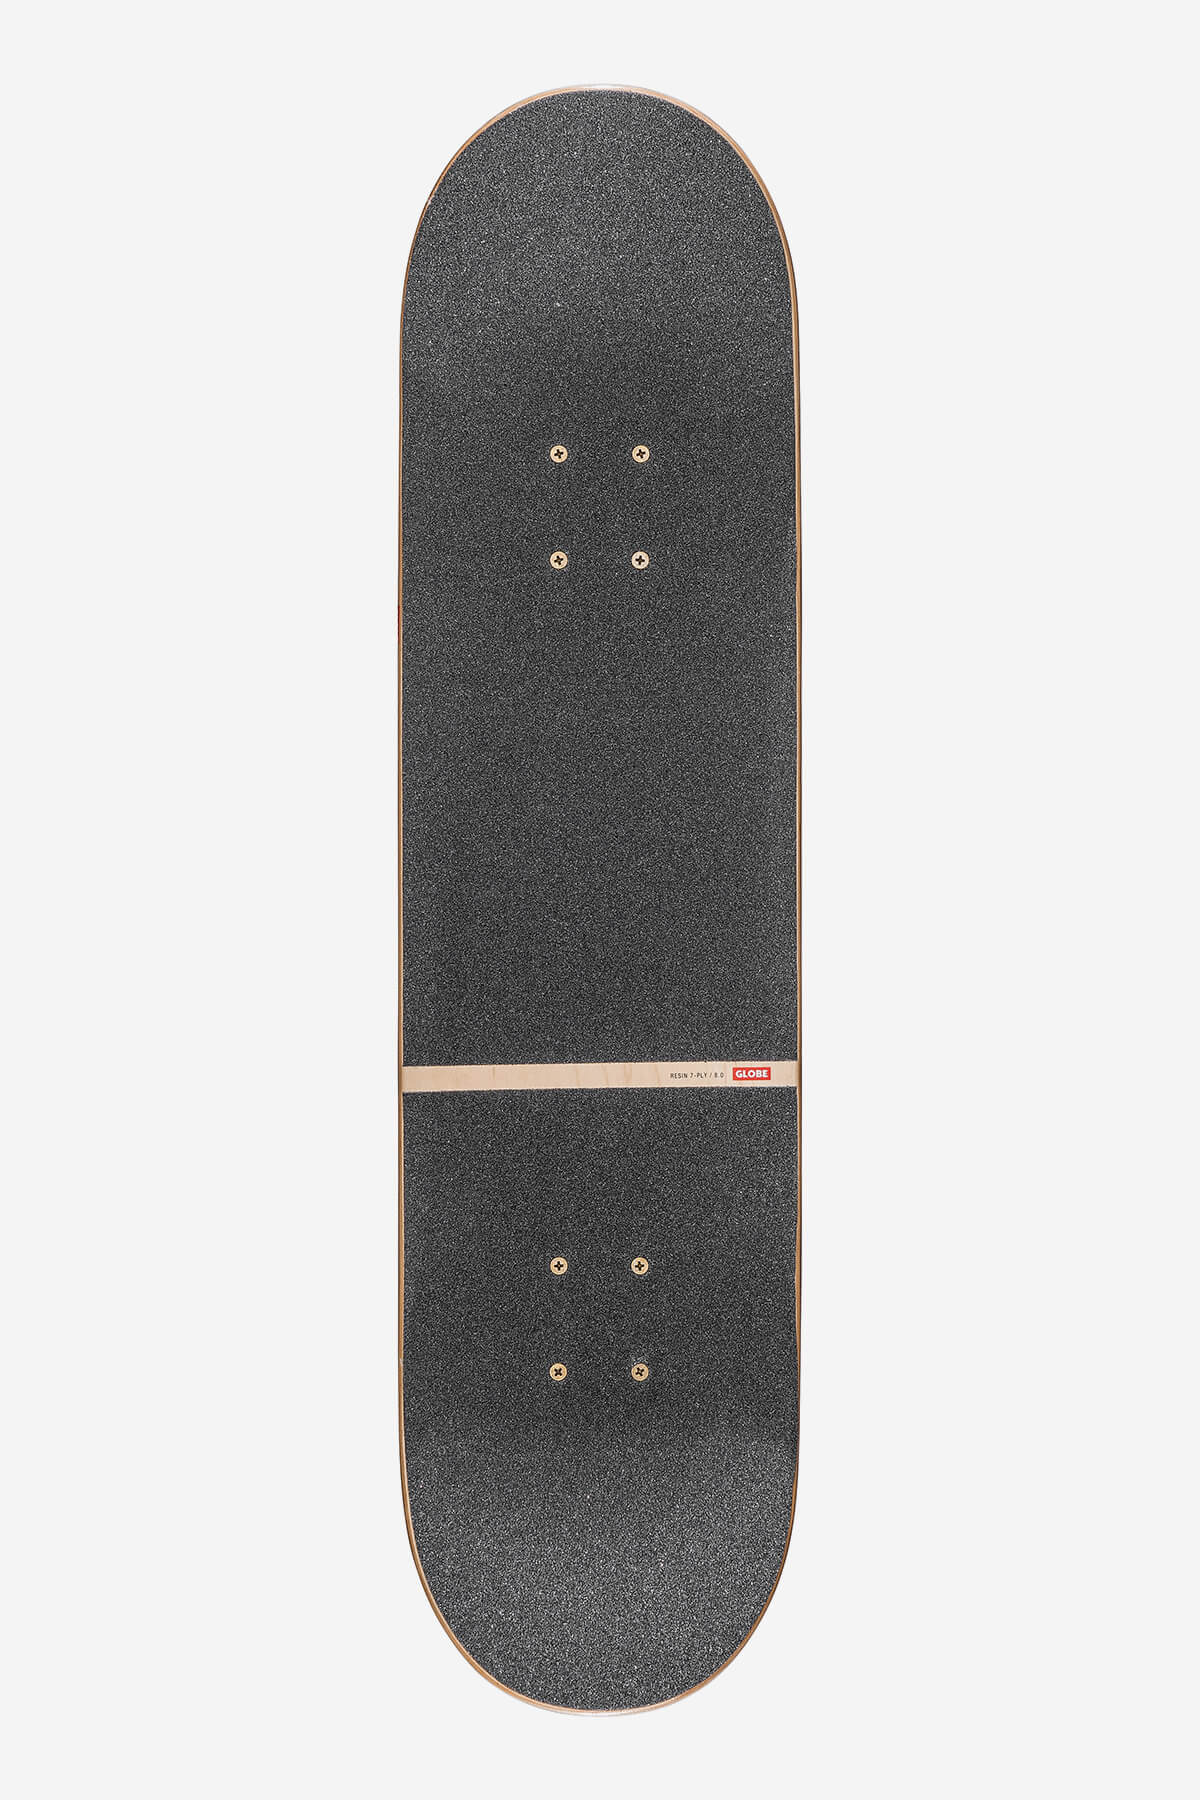 Globe Skateboard completa G3 Bar 8.0" Completa Skateboard en Negro